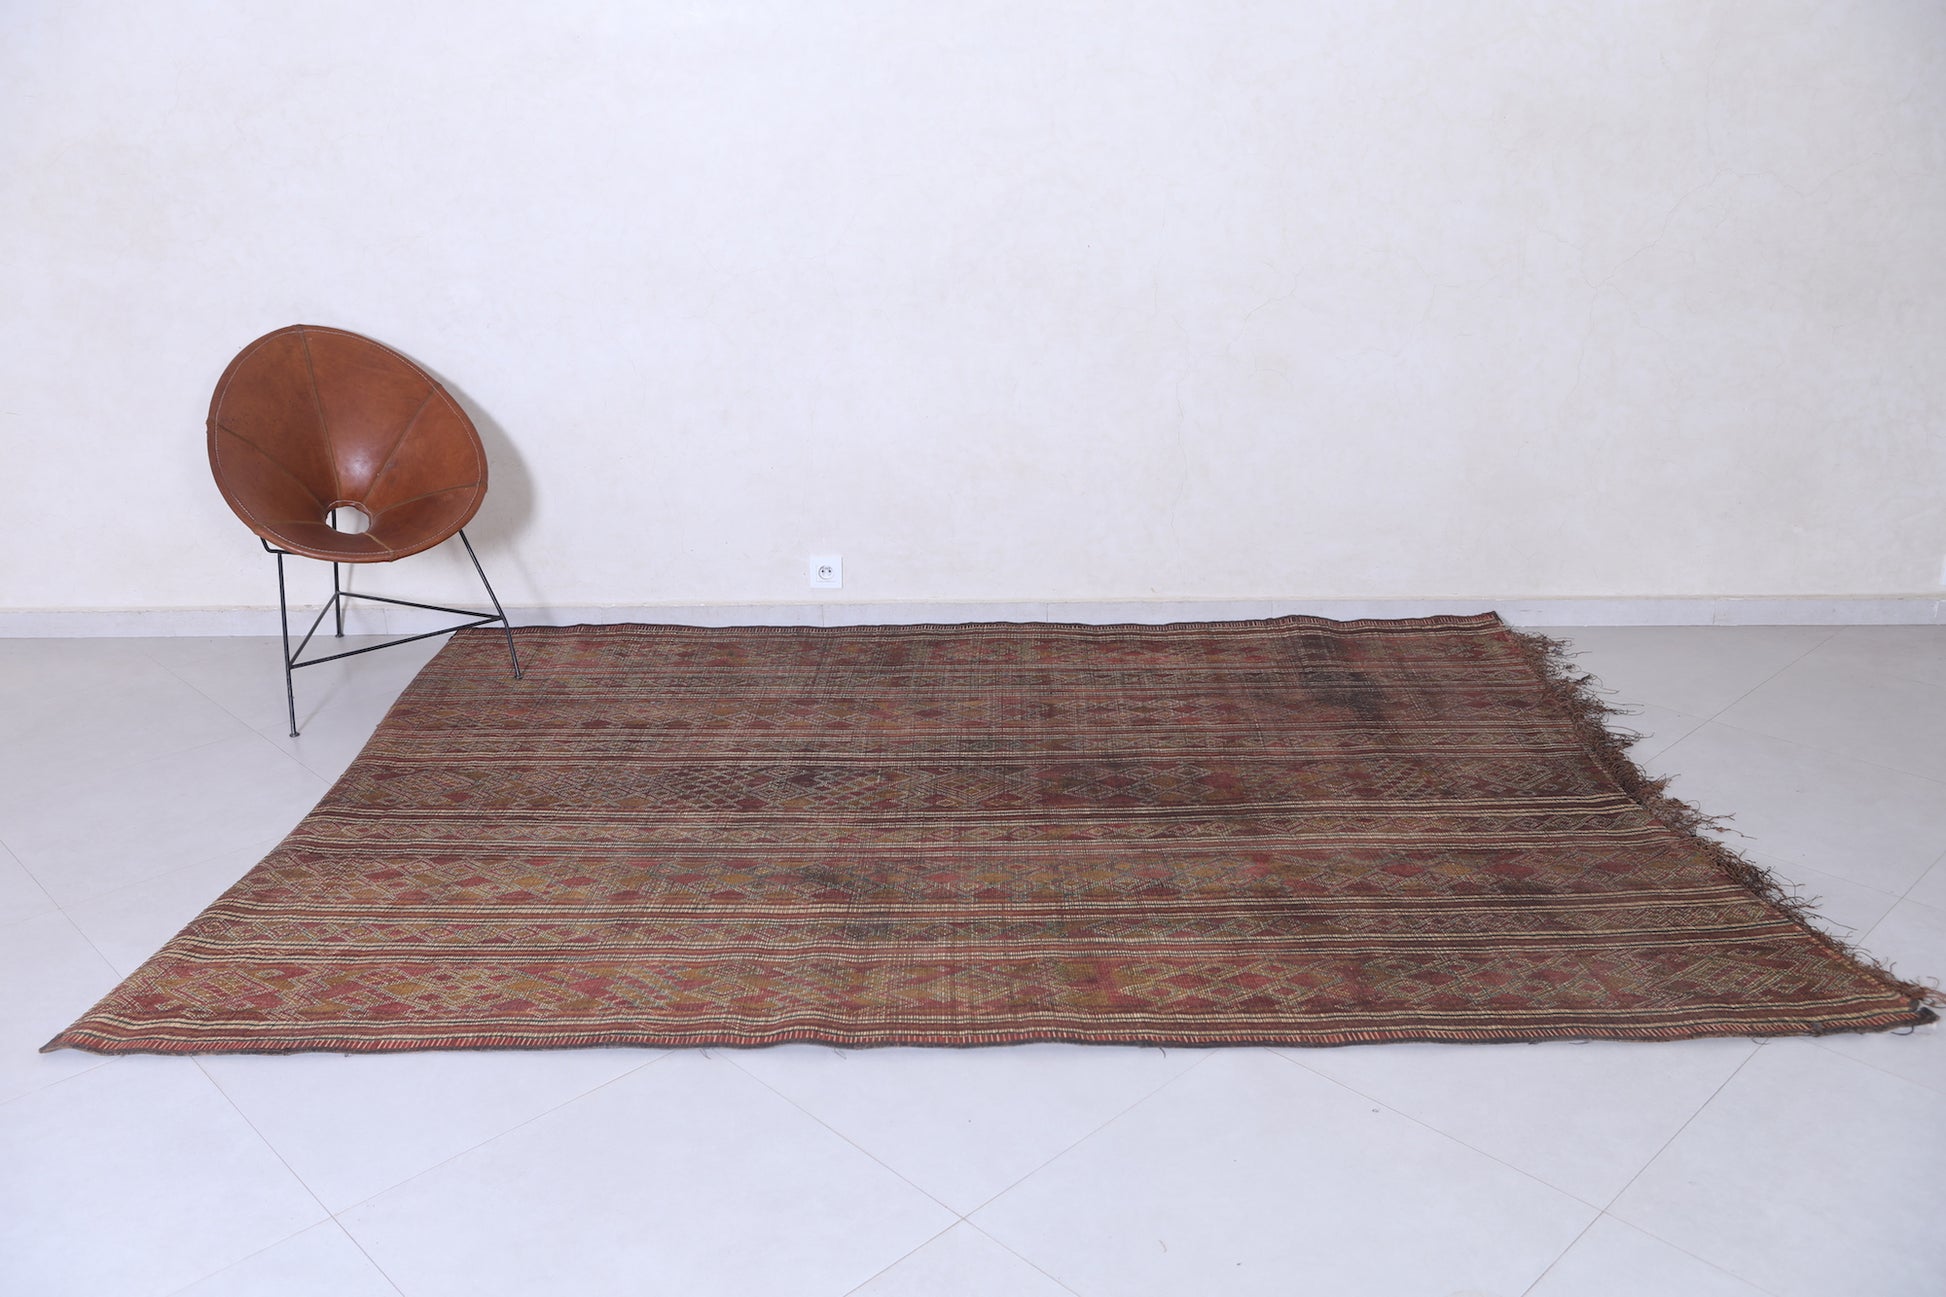 Handwoven Tuareg rug 6.4 X 9 Feet